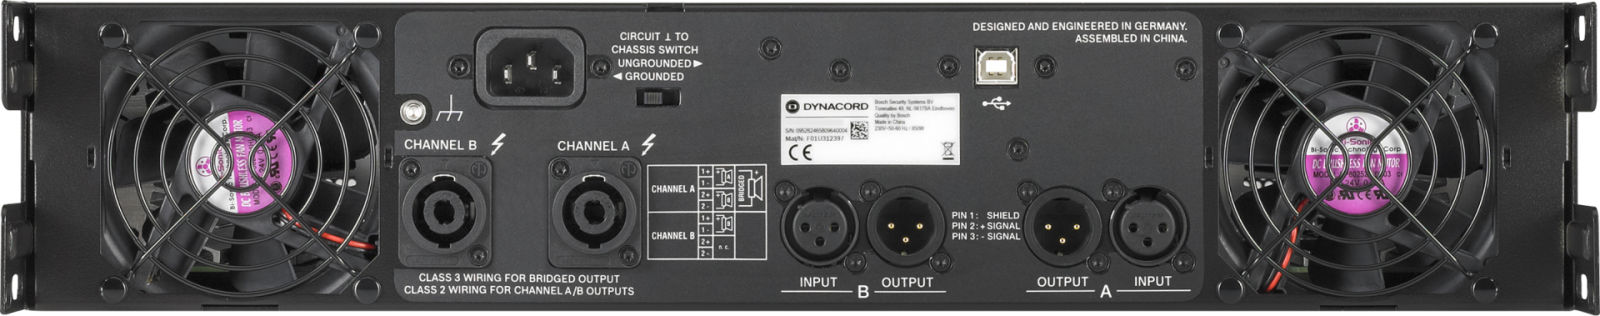 Power công suất Dynacor L3600FD